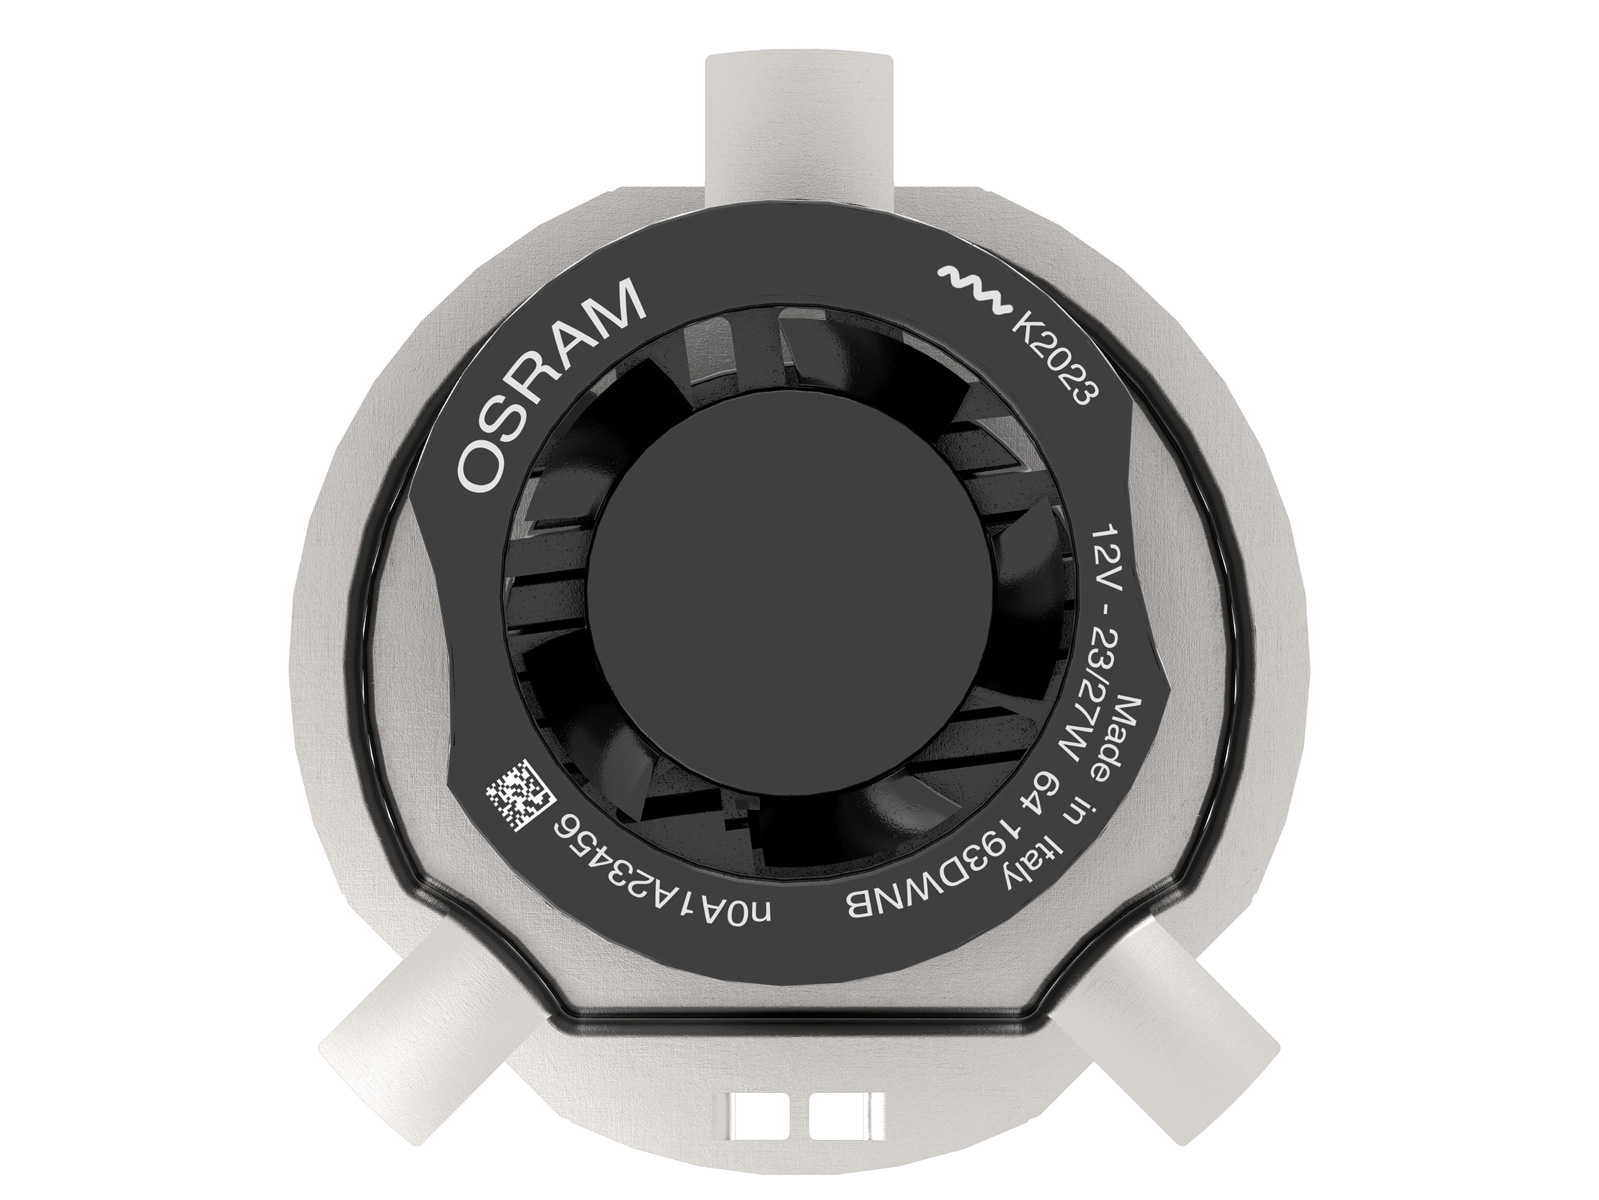 OSRAM H4 LED Night Breaker für Morgan Roadster mit